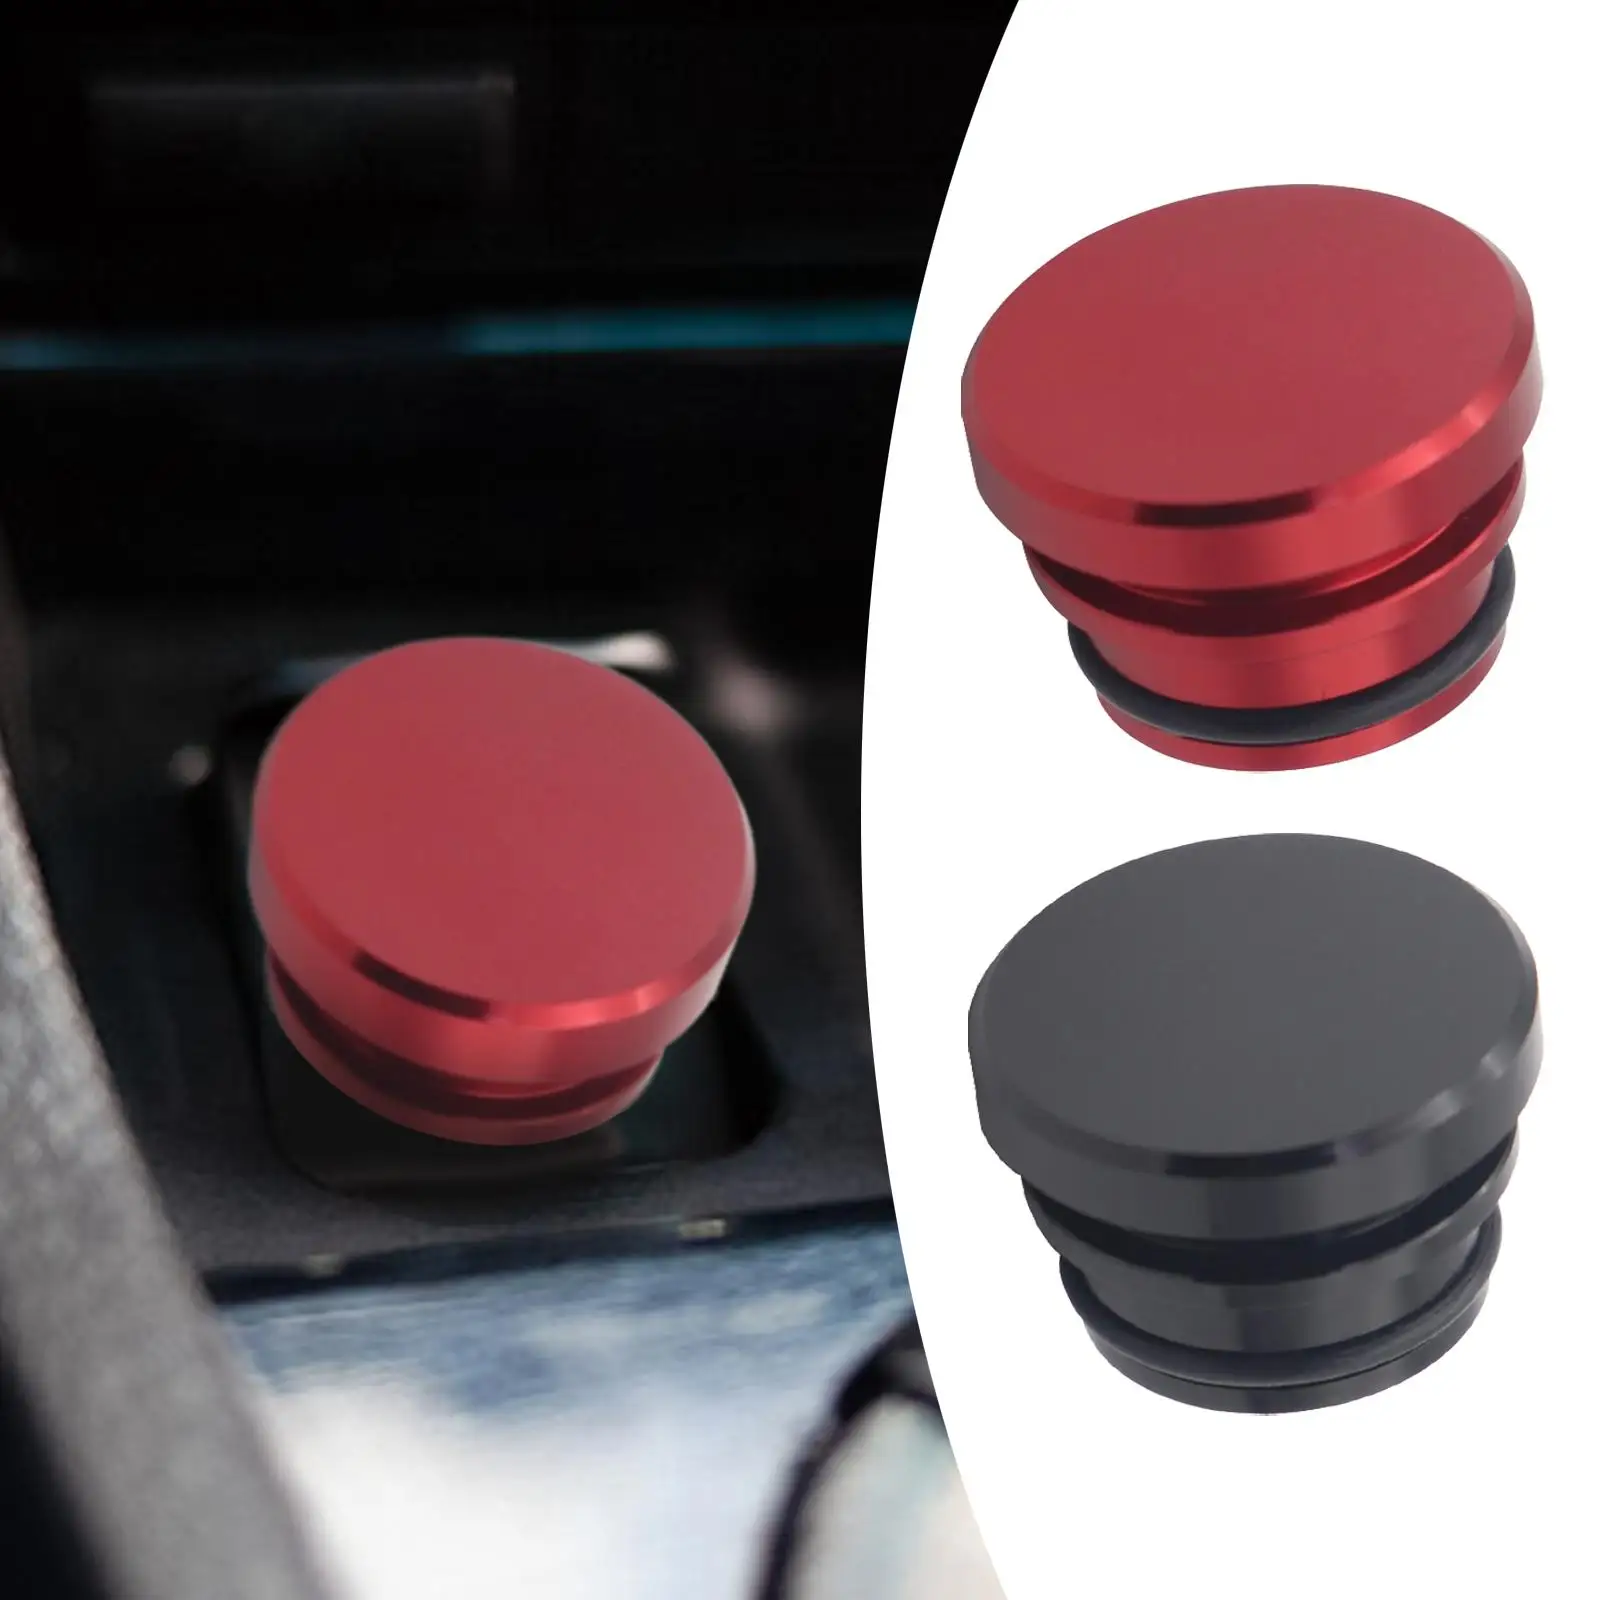 2 Pieces Cigarette Lighter Plug Cover Car Accessories for SUV Truck Car